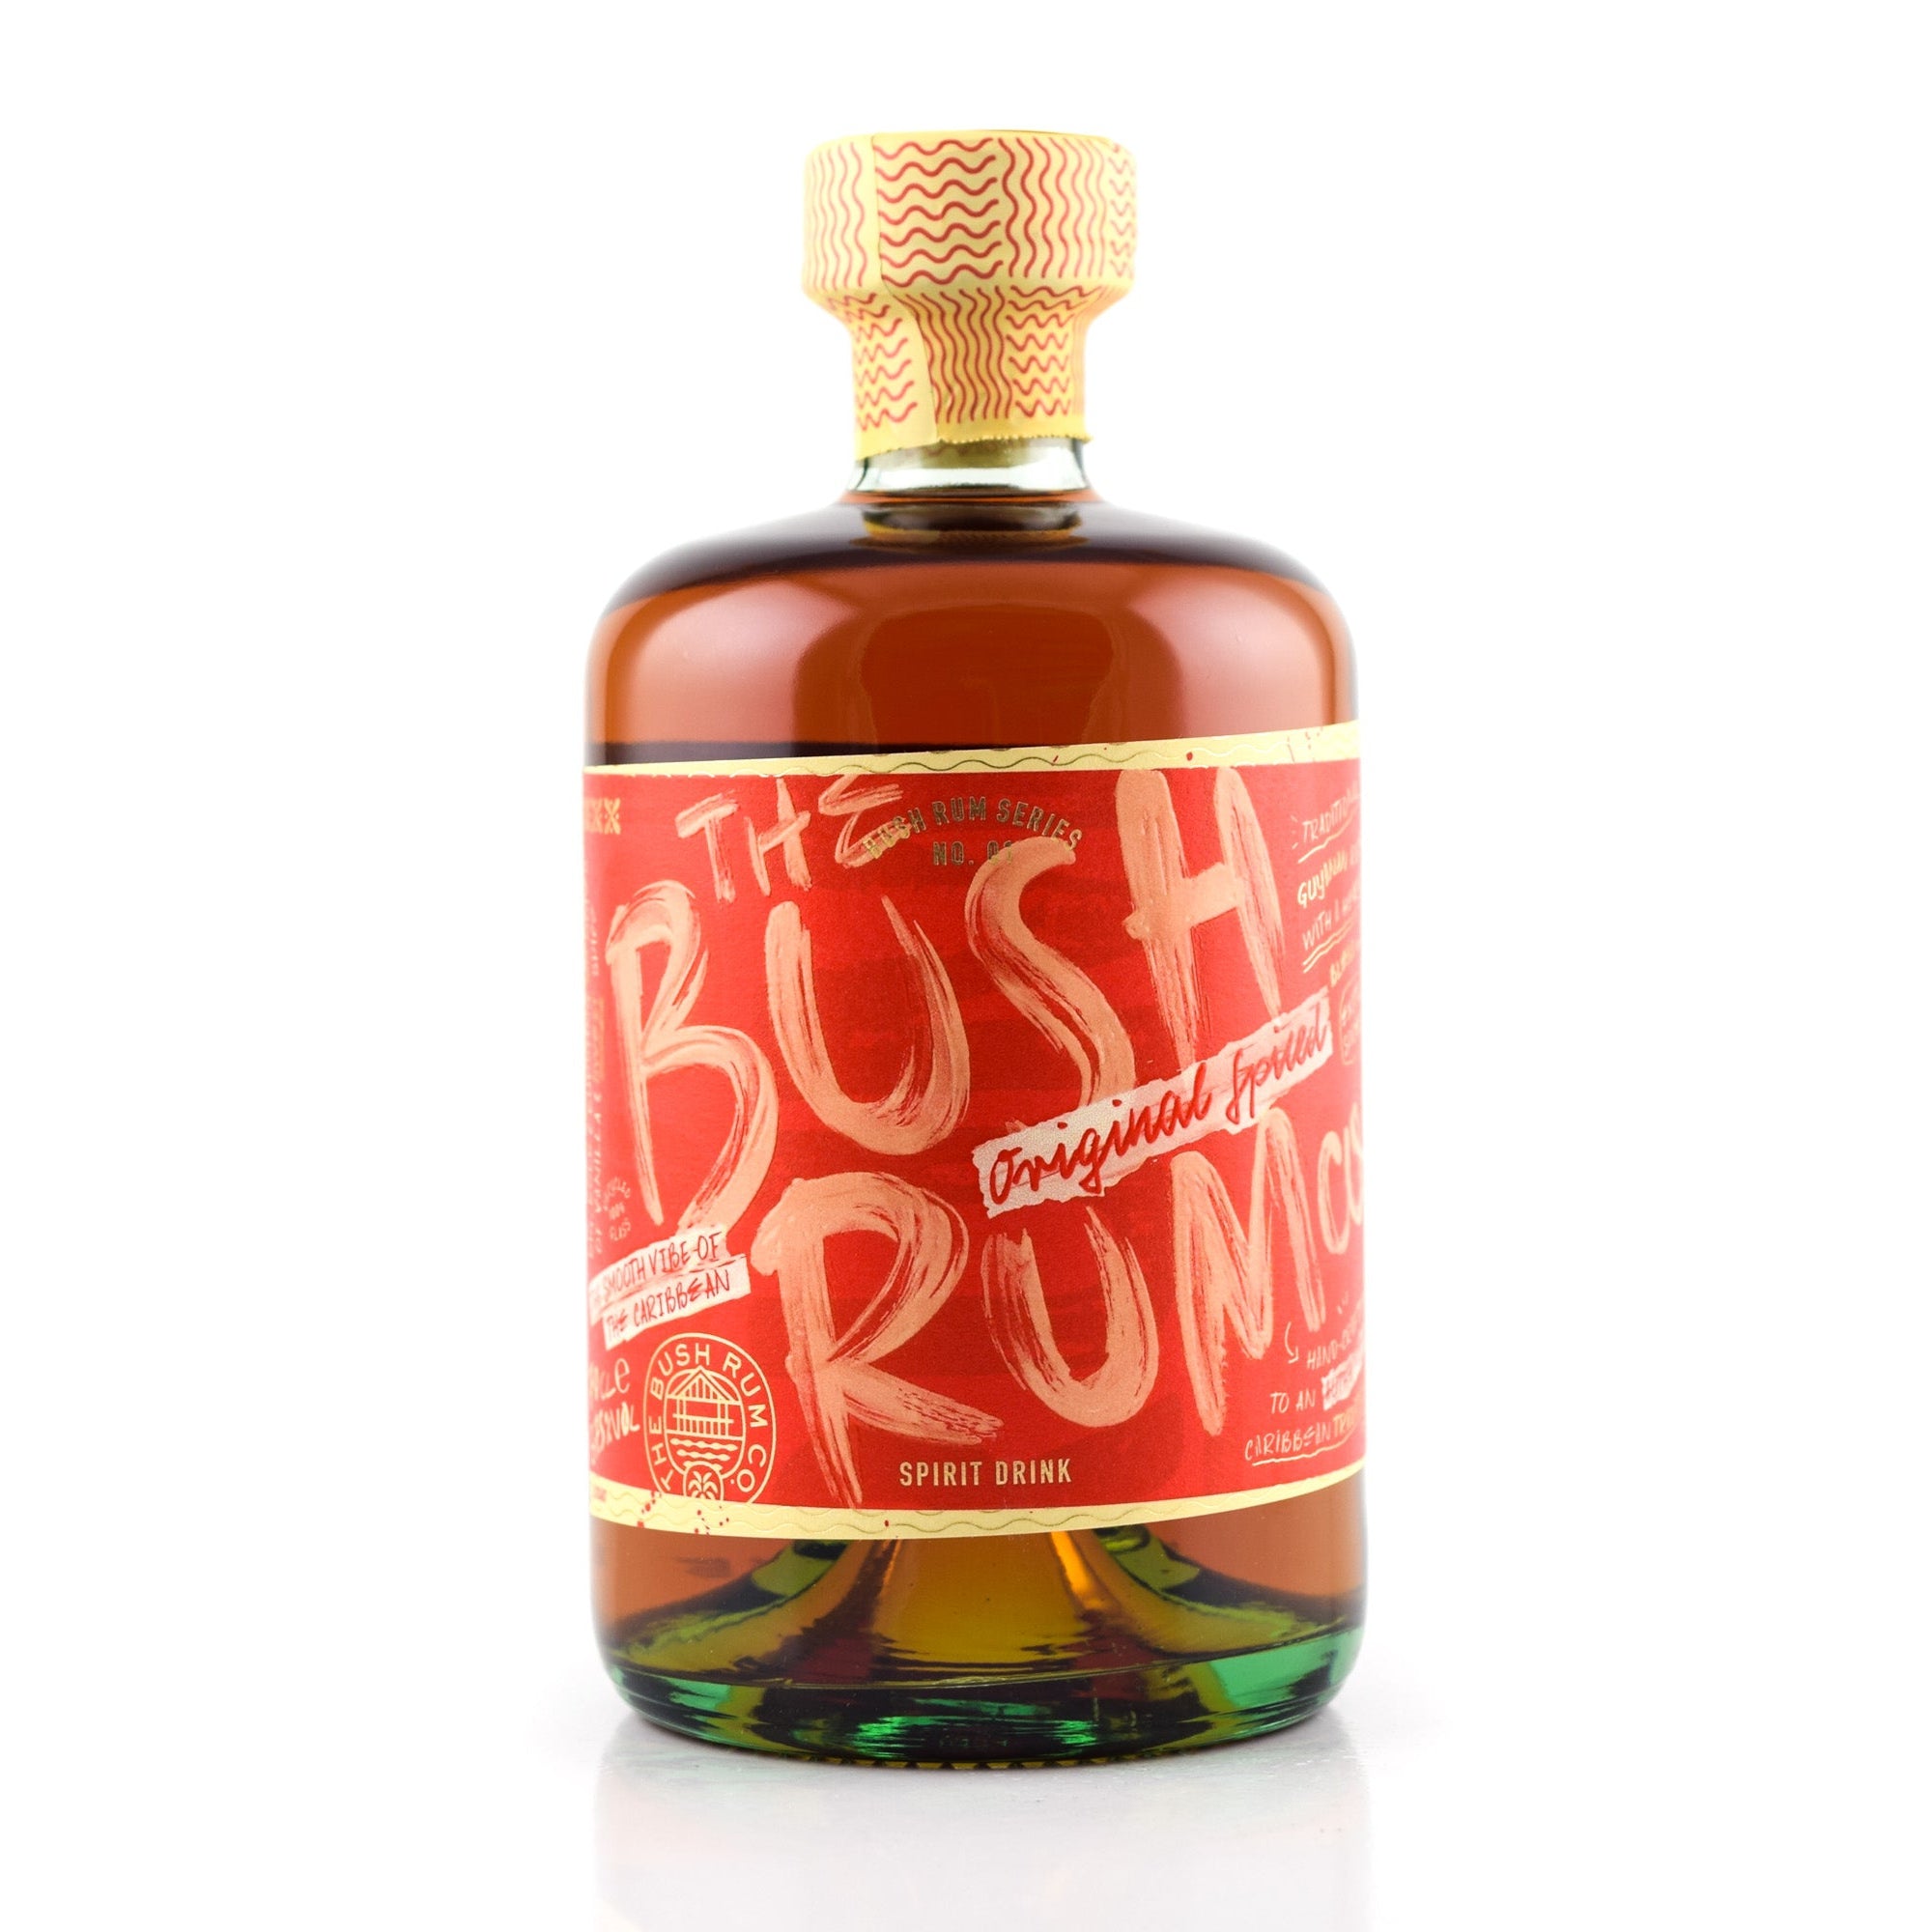 Bush Original Spiced Rum Vol. 0,7l 37,5